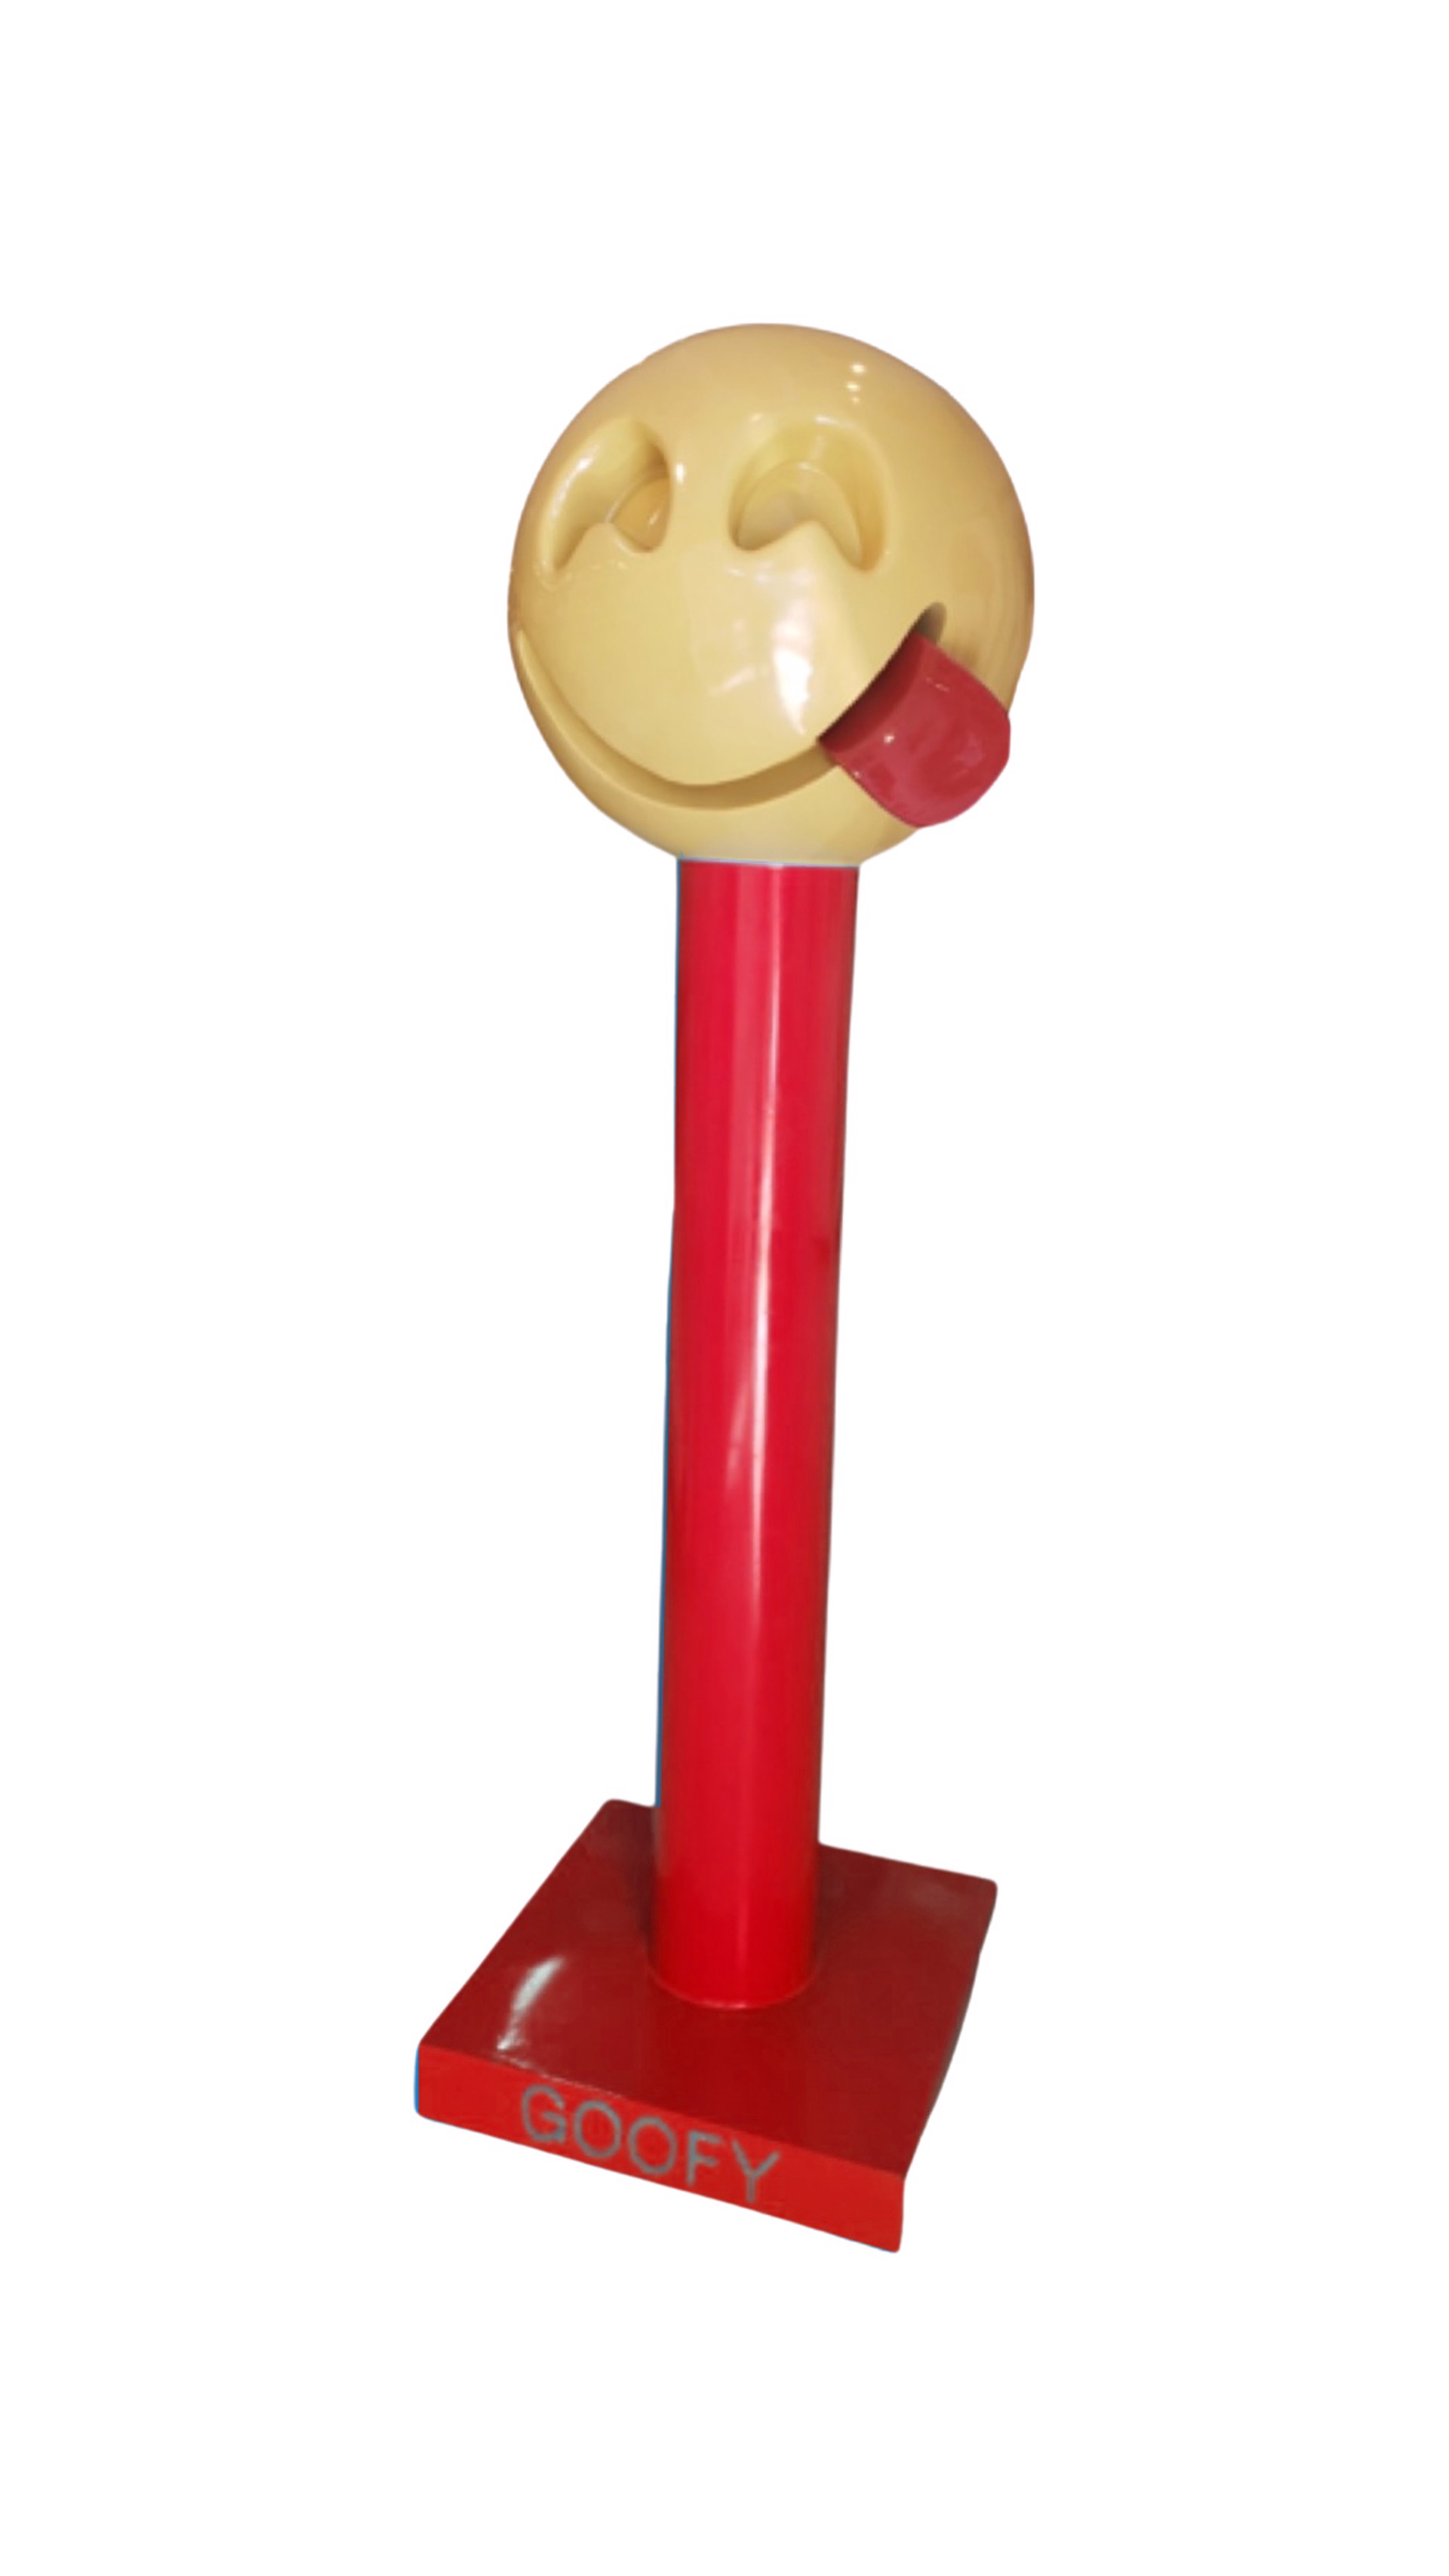 Custom "Goofy" with Red Pillar by Emoji Stainless Steel Sculptures by Elena Bulatova